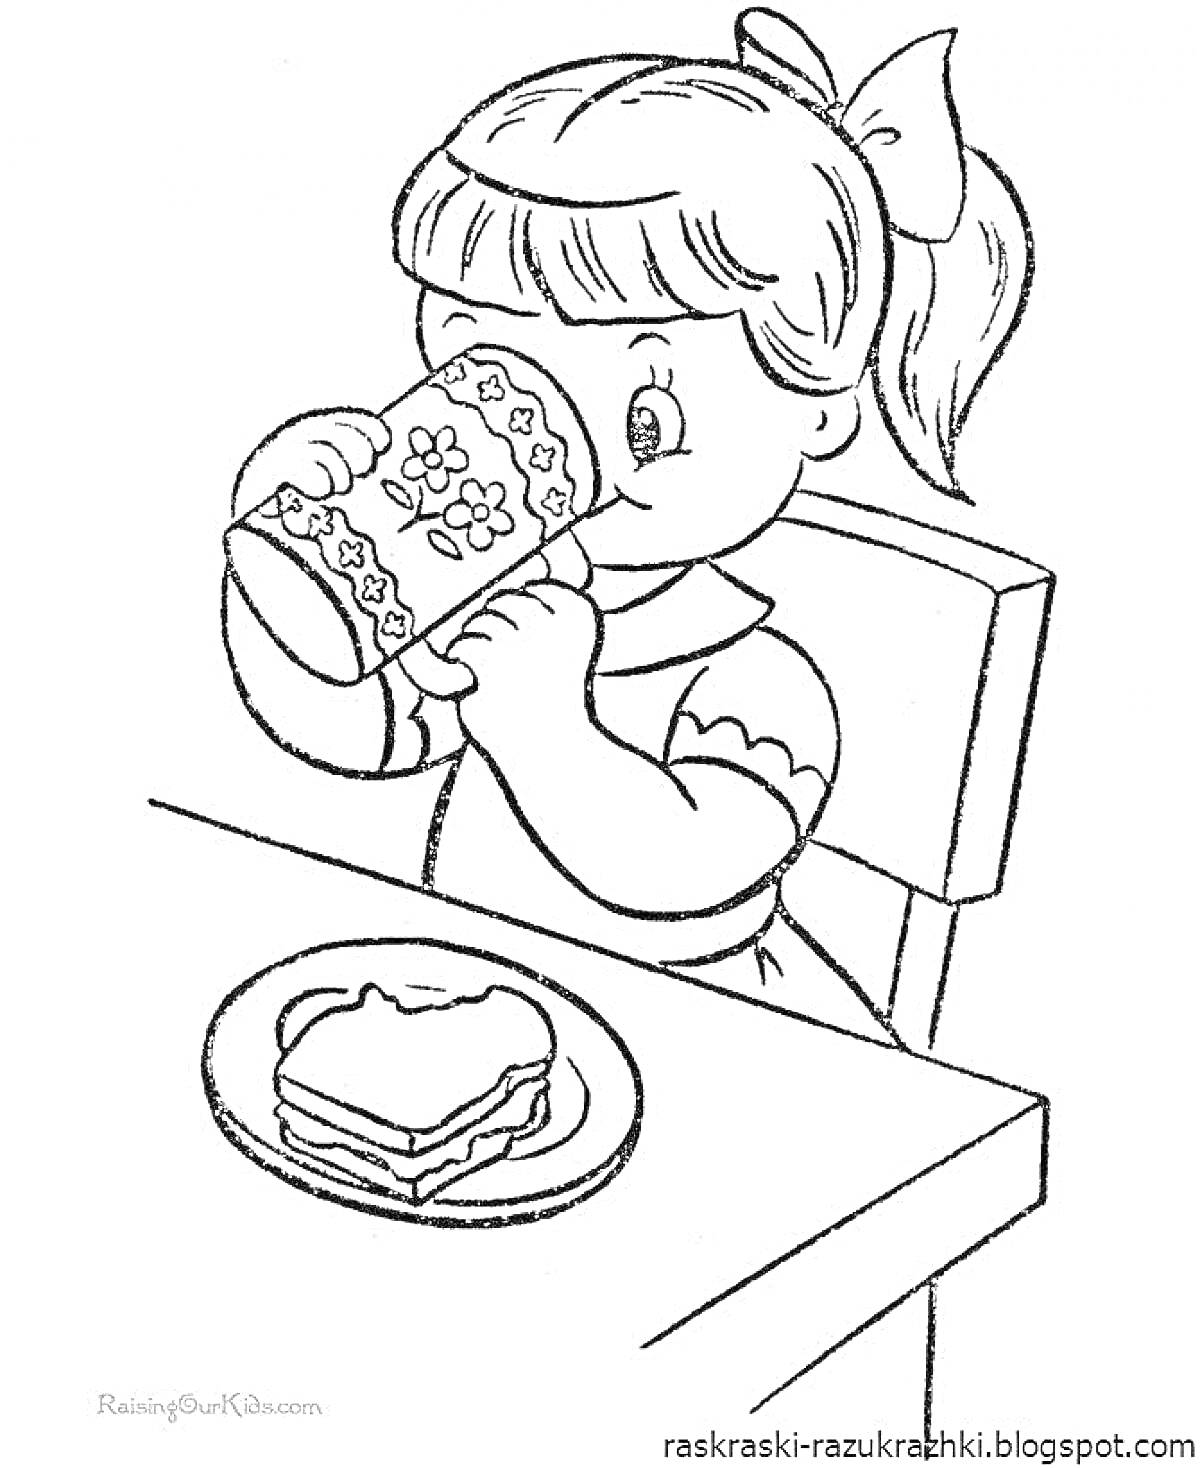 На раскраске изображено: Девочка, Стол, Тарелка, Еда, Питьё, Завтрак, Бутерброд, Кружки